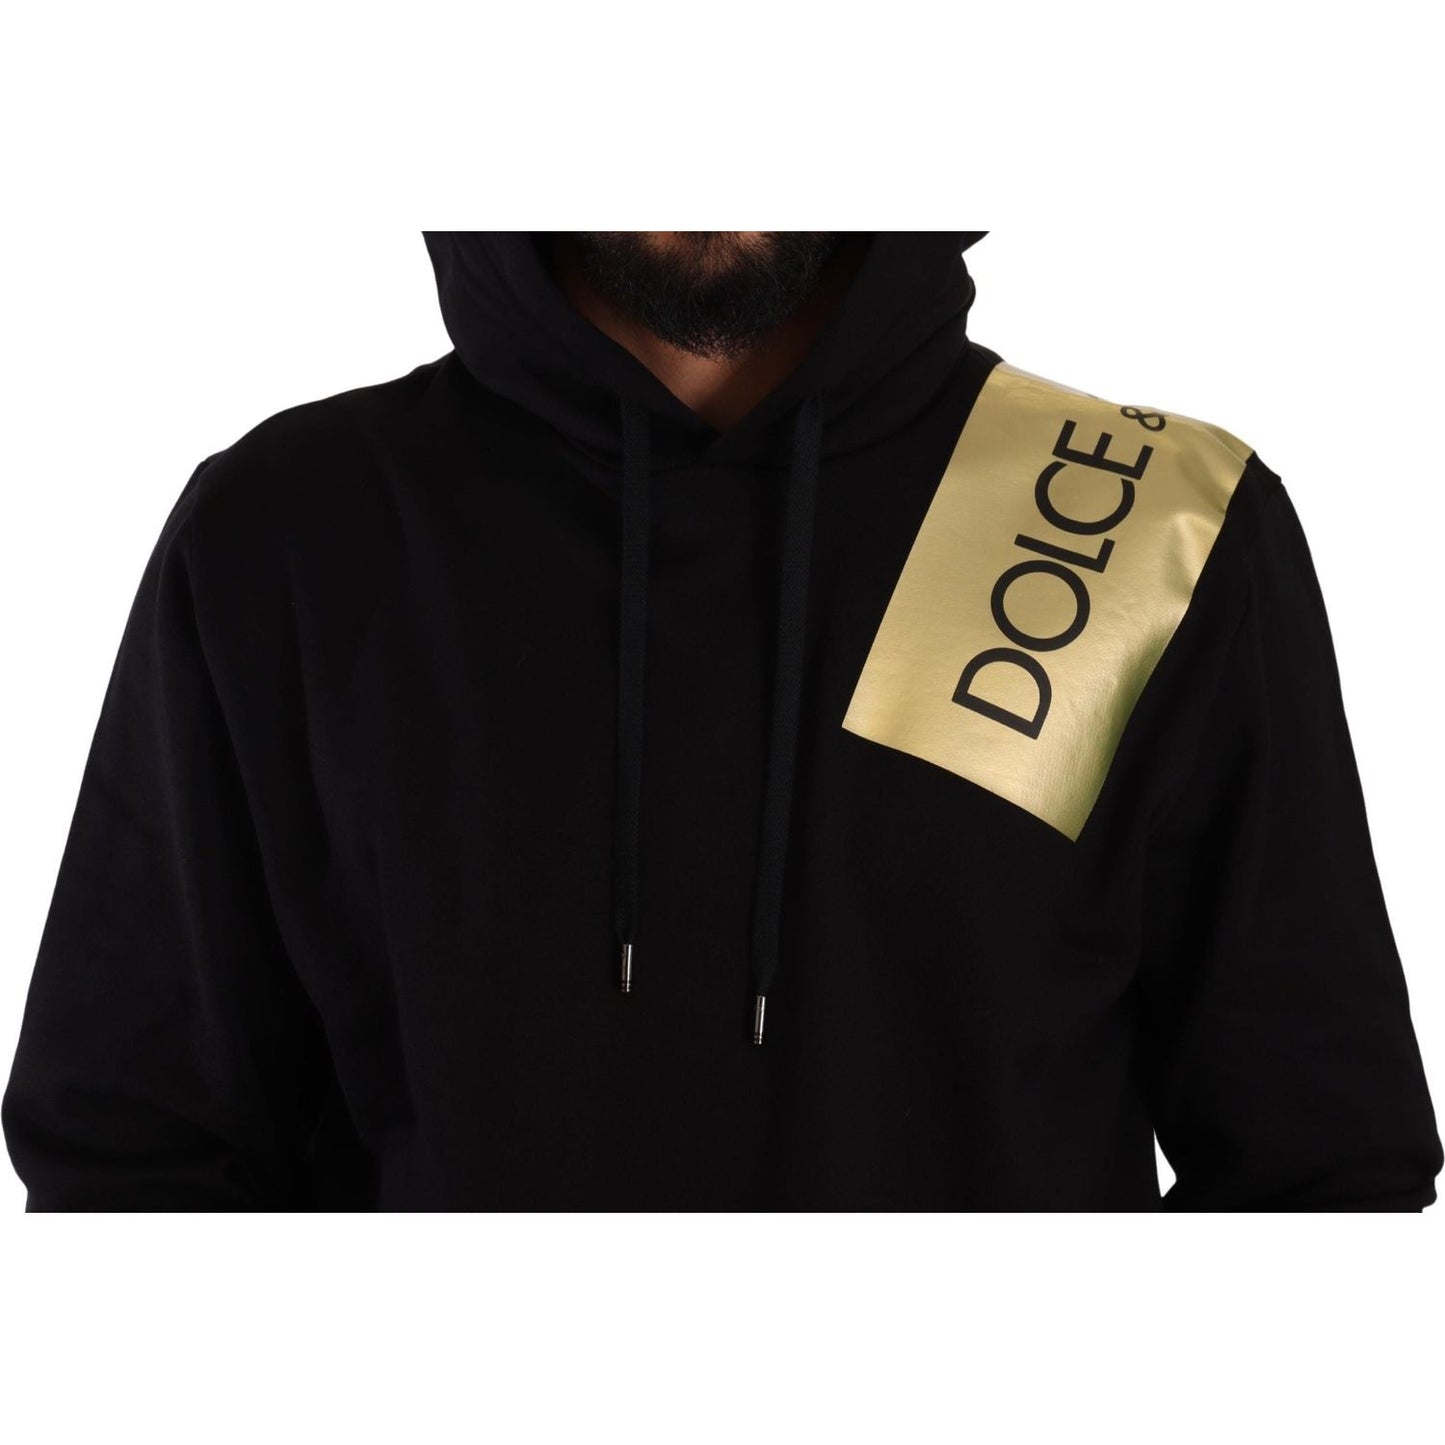 Dolce & Gabbana D&G Black Golden-Logo Pullover elevate-your-style-with-a-black-golden-logo-pullover